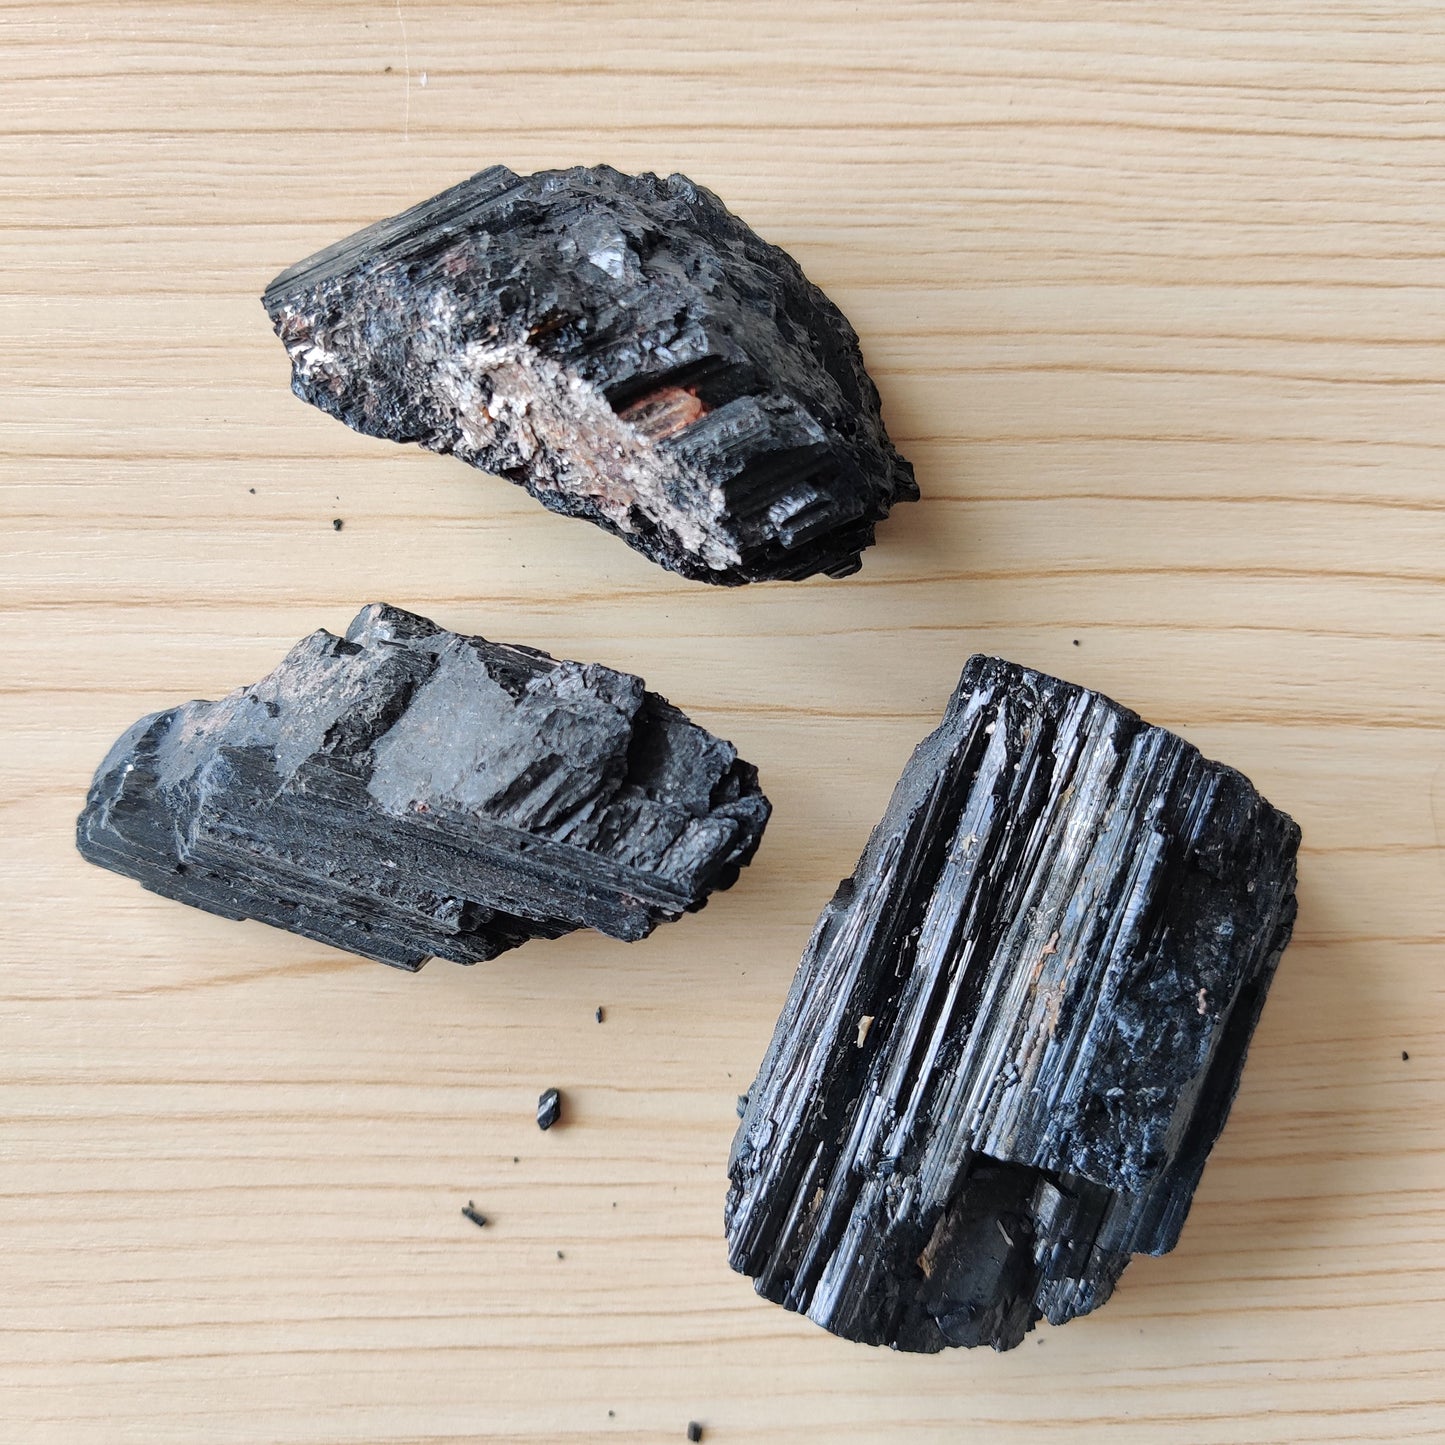 Black Tourmaline Crystal Piece (5-8 cm) - Rivendell Shop